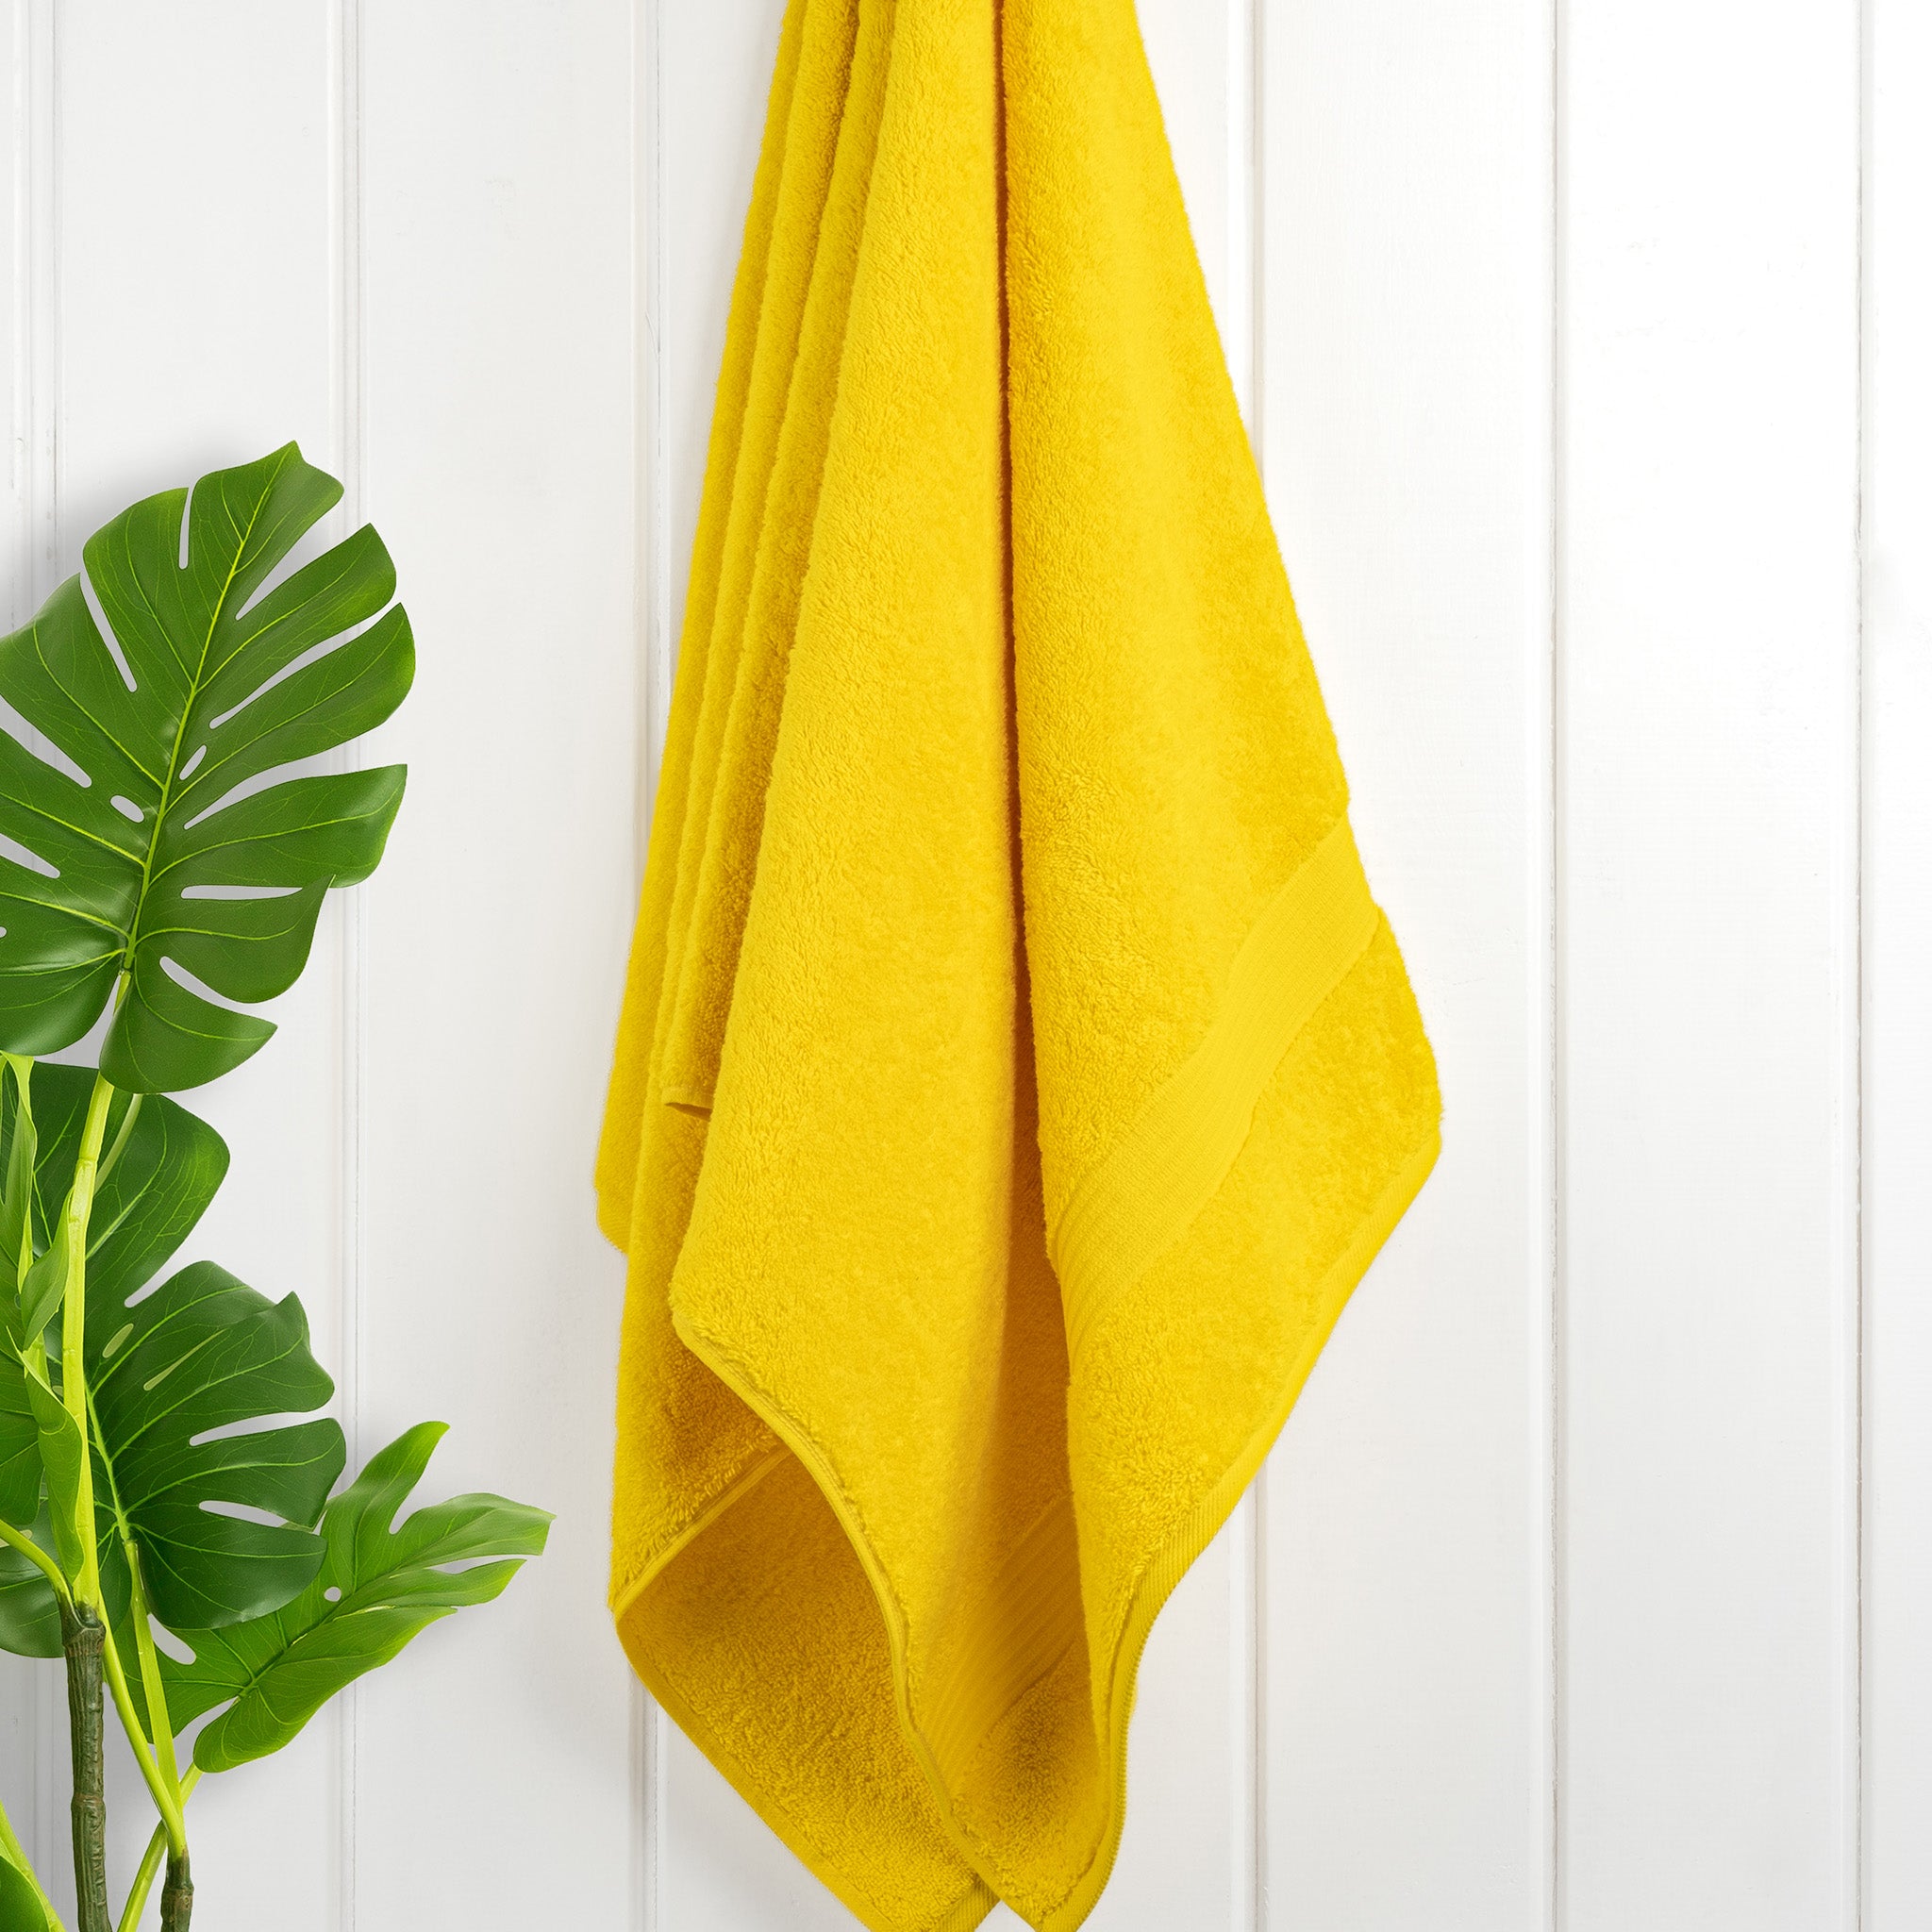 American Soft Linen Bekos 100% Cotton Turkish Towels, 4 Piece Bath Towel Set -turquoise-yellow-02